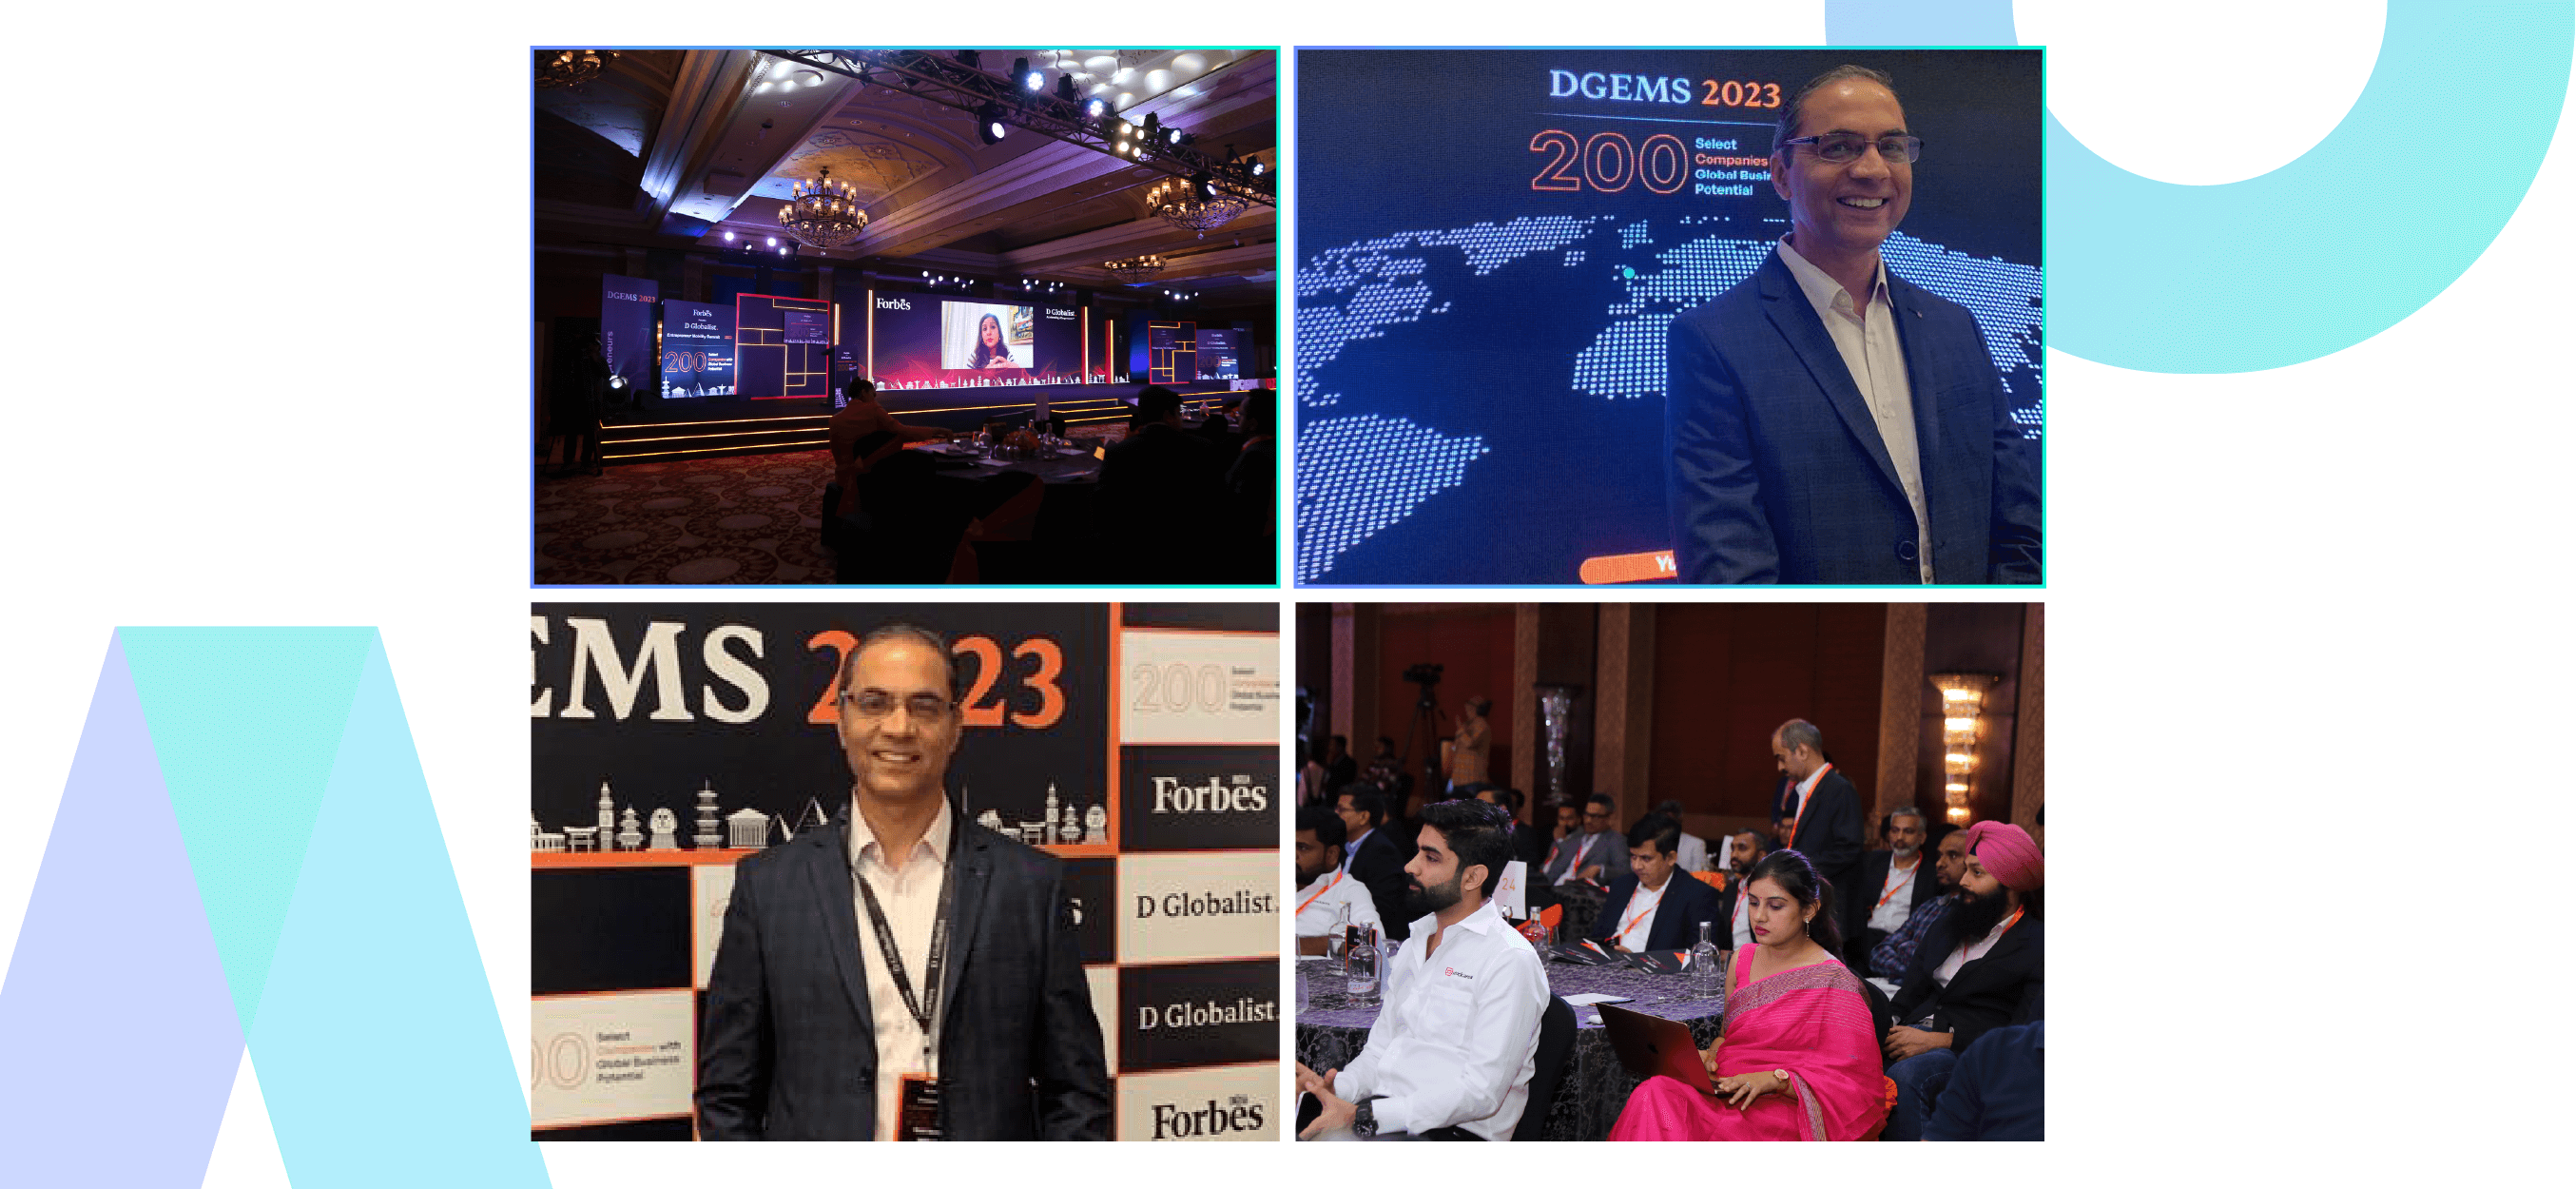 WAISL Joins Forbes India’s Elite 200 Global Innovators!